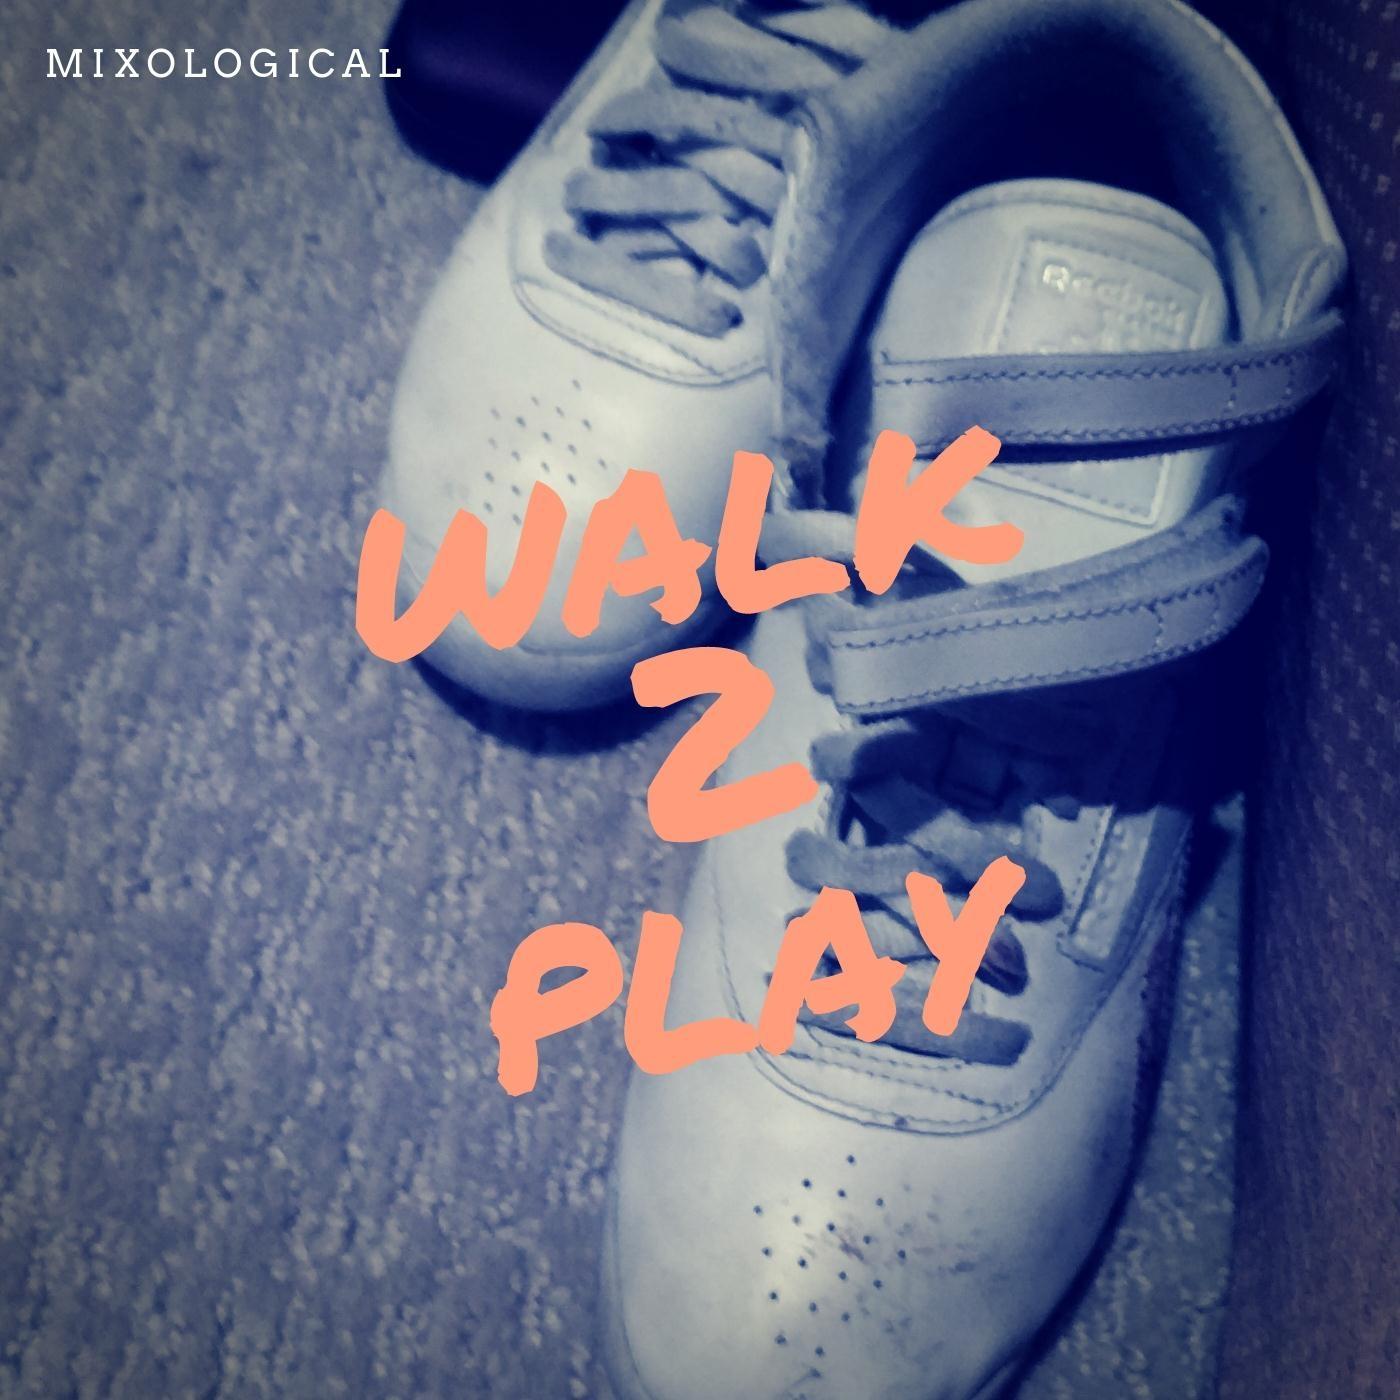 Walk 2 Play